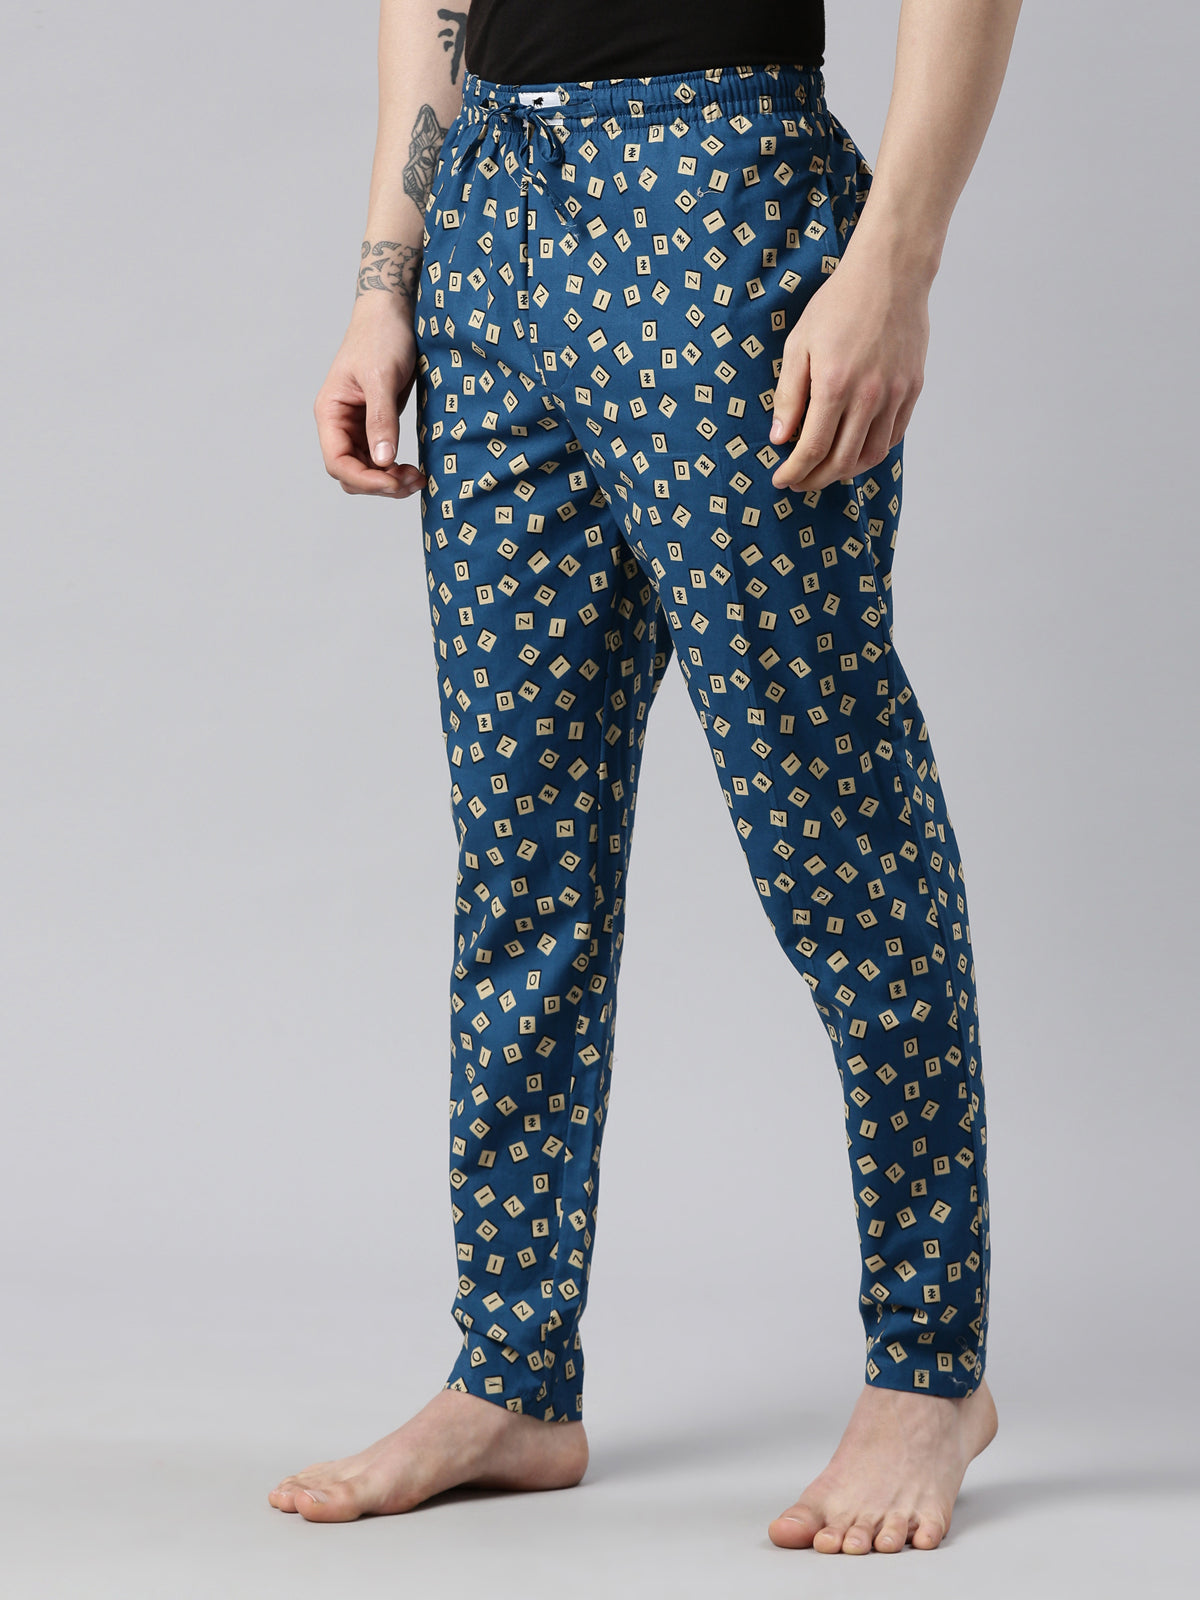 Alphabetic Teal Blue Pyjamas Pyjamas Bushirt   